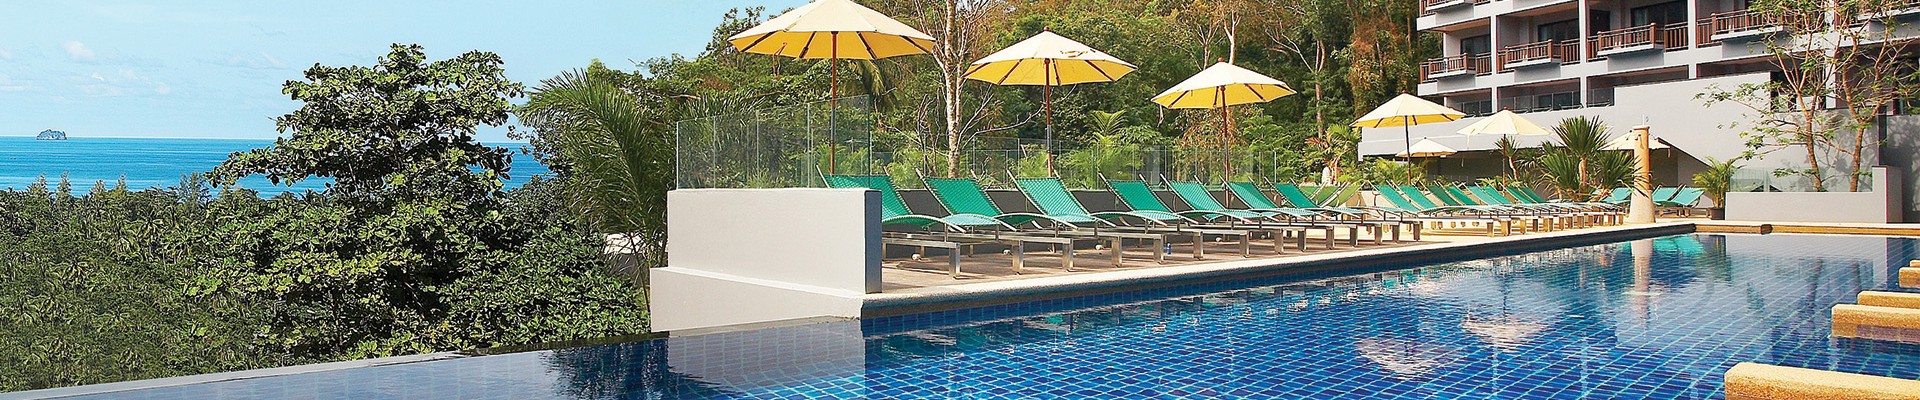 3*Plus Krabi Cha-Da Resort - Thailand Package (7 nights)